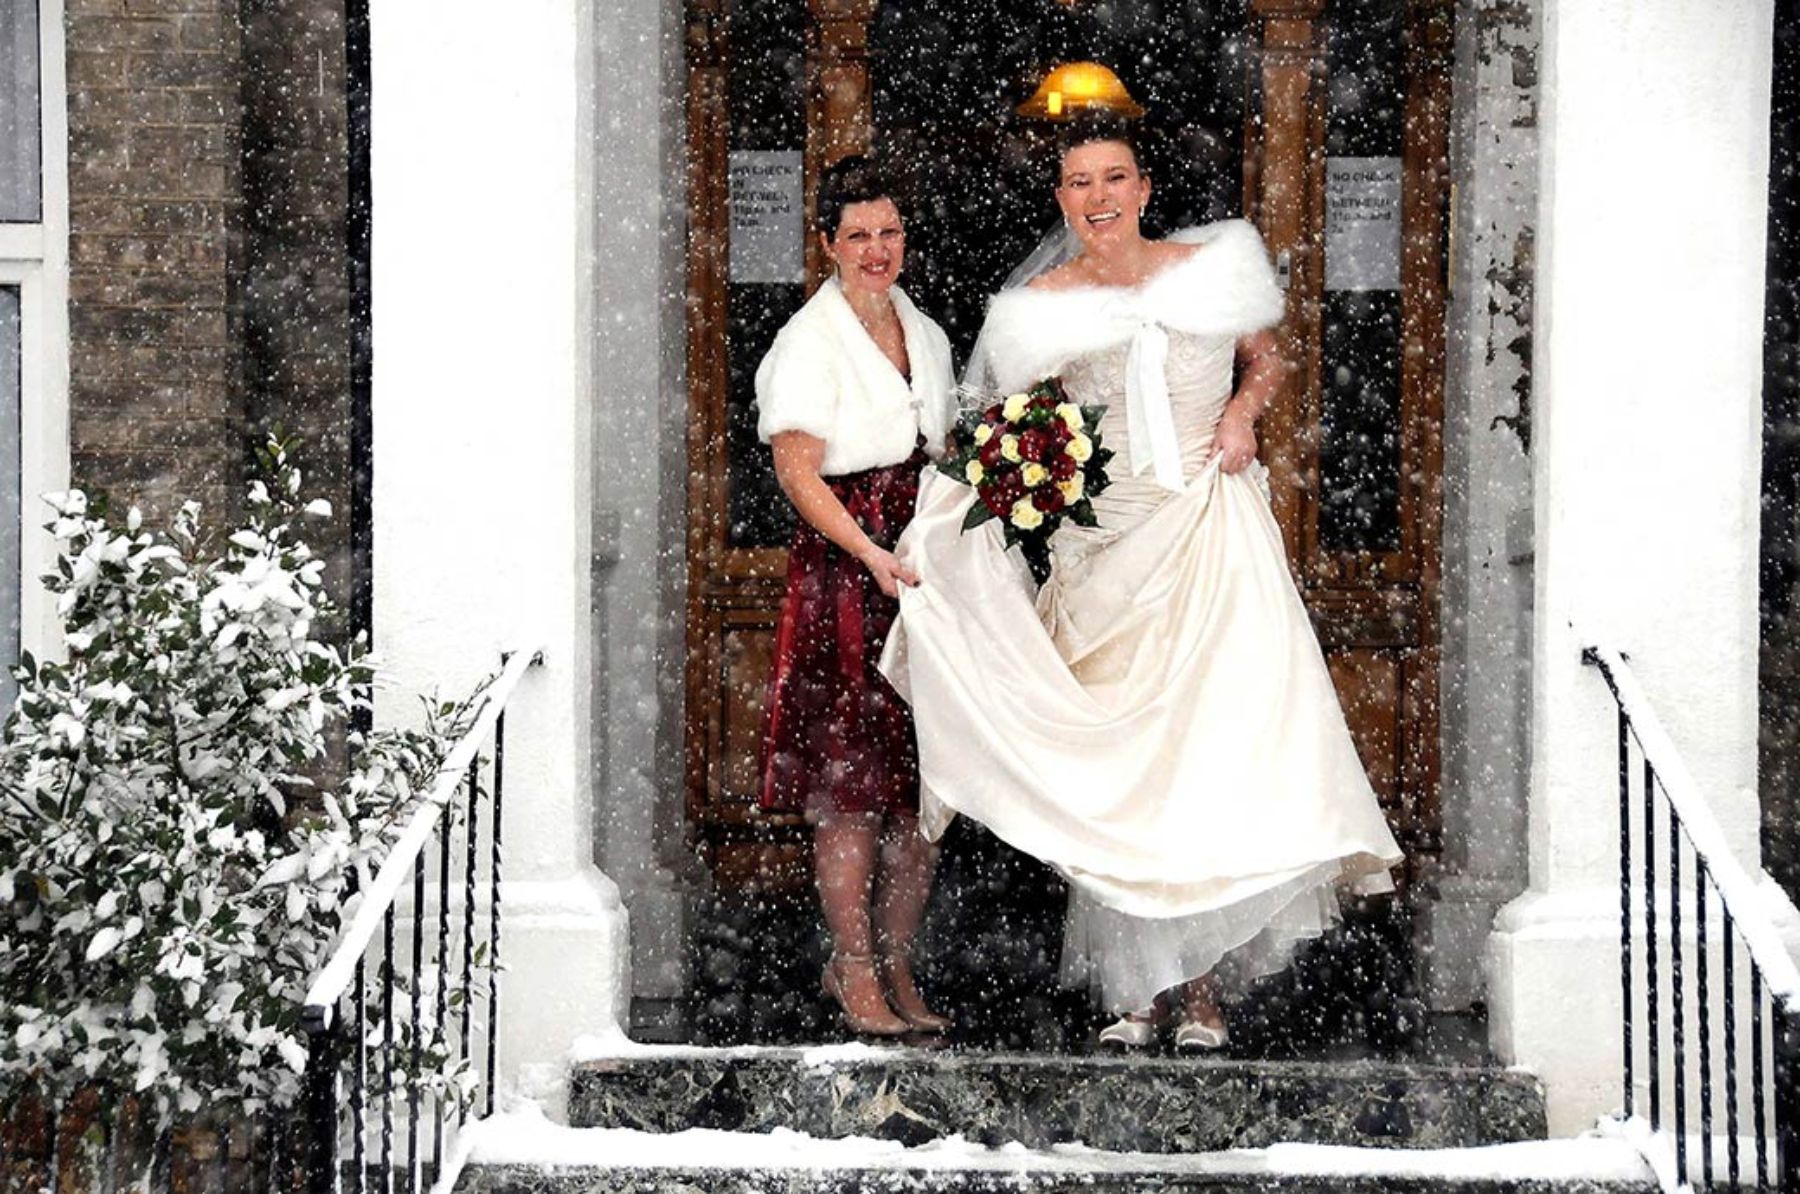 Bride holding flower bouquet in snow